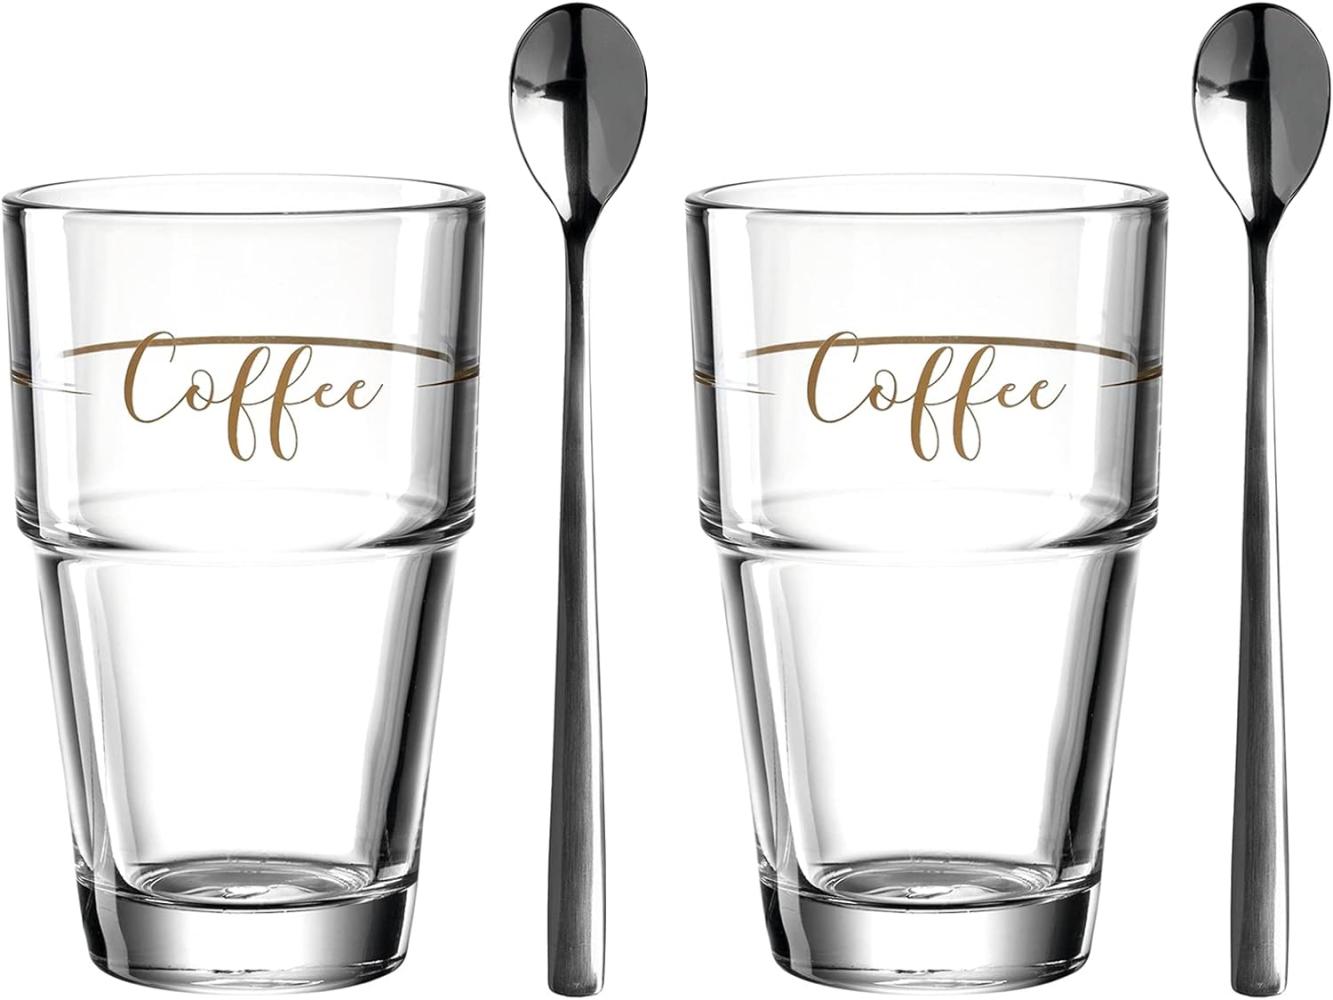 Leonardo Becher Coffee Solo 2er-Set + 2 Löffel, Kaffeebecher, Gläser, Kalk-Natron Glas, mehrfarbig, 410 ml, 043477 Bild 1